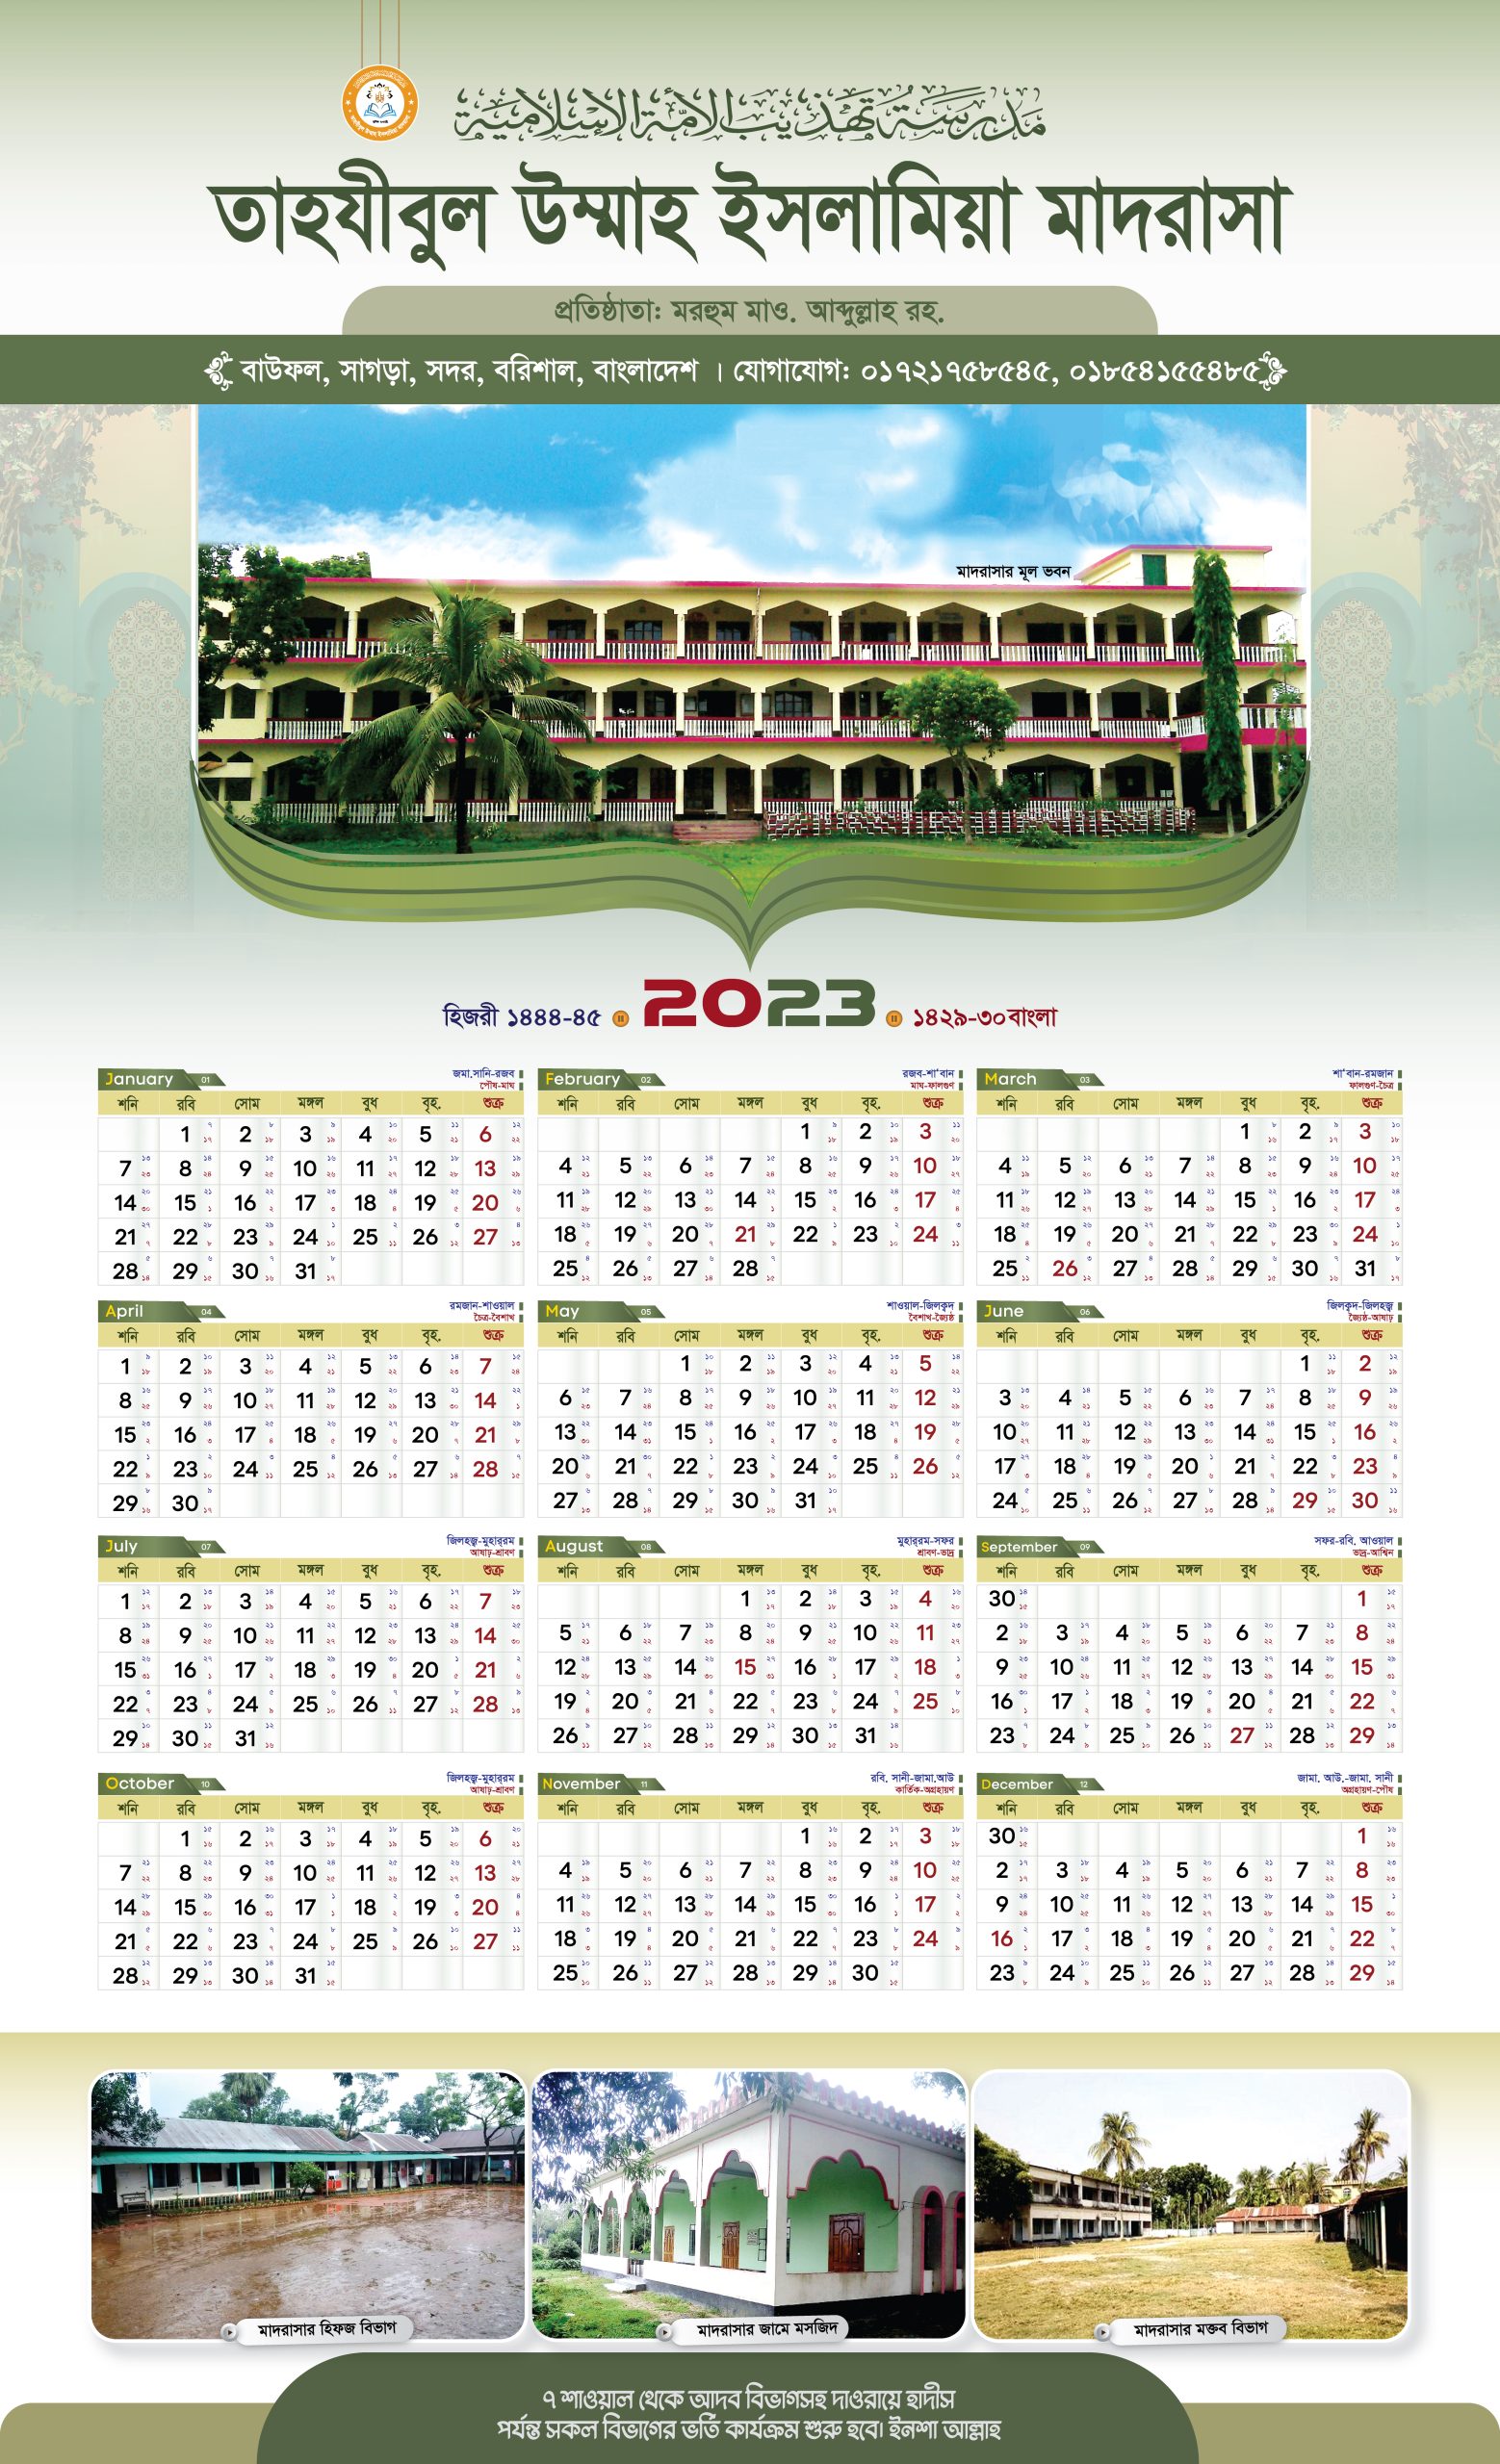 Arabic English and Bangla calendar 2023 Shorif Art